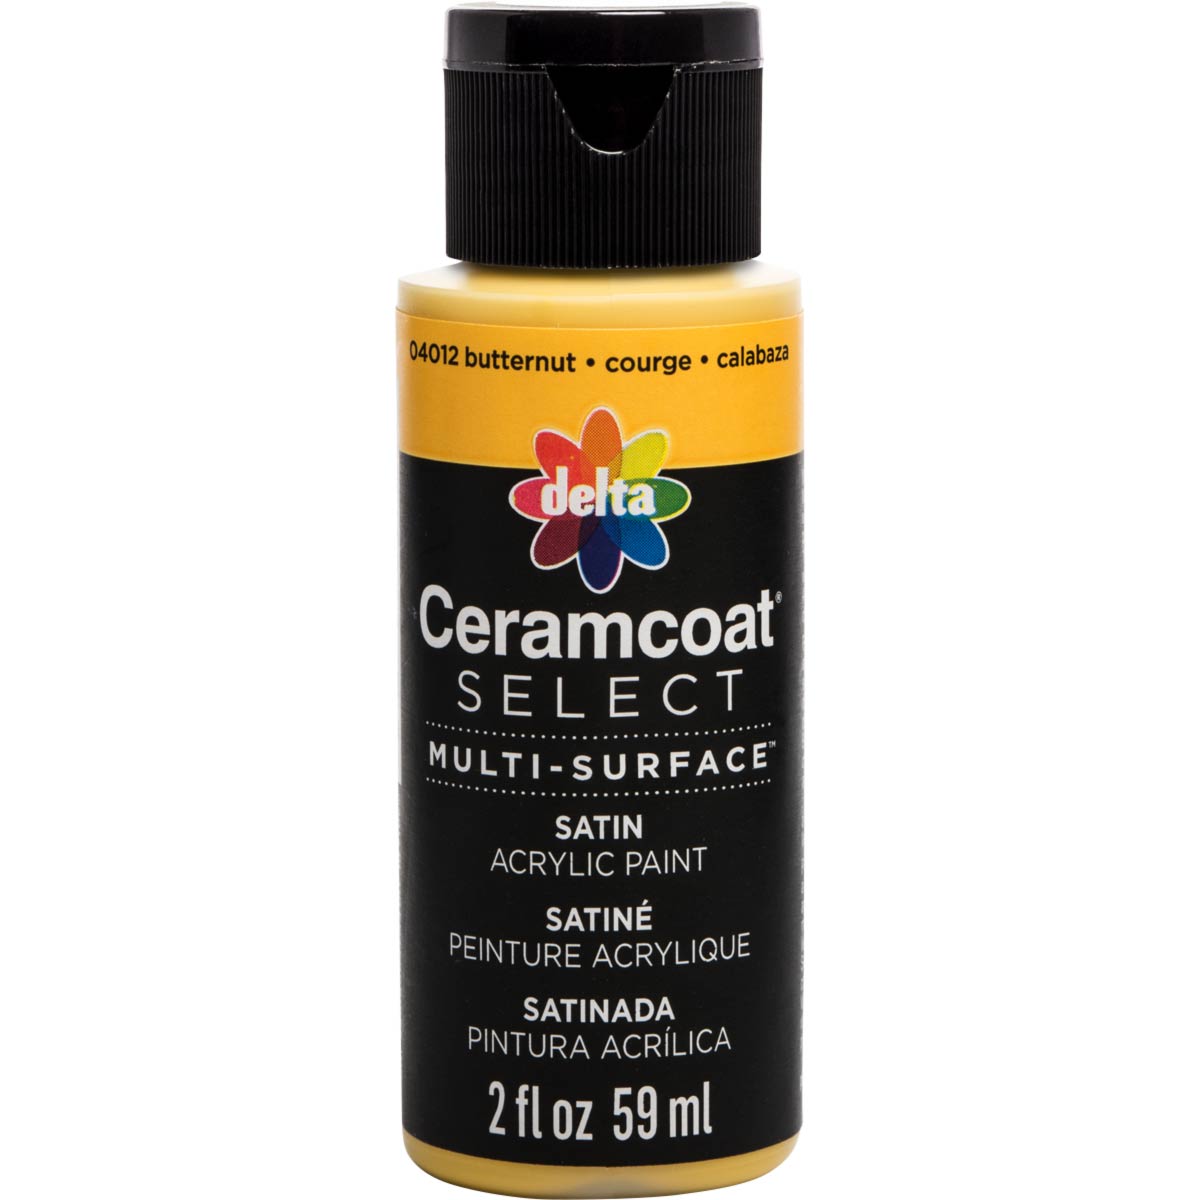 Delta Ceramcoat ® Select Multi-Surface Acrylic Paint - Satin - Butternut, 2 oz. - 04012